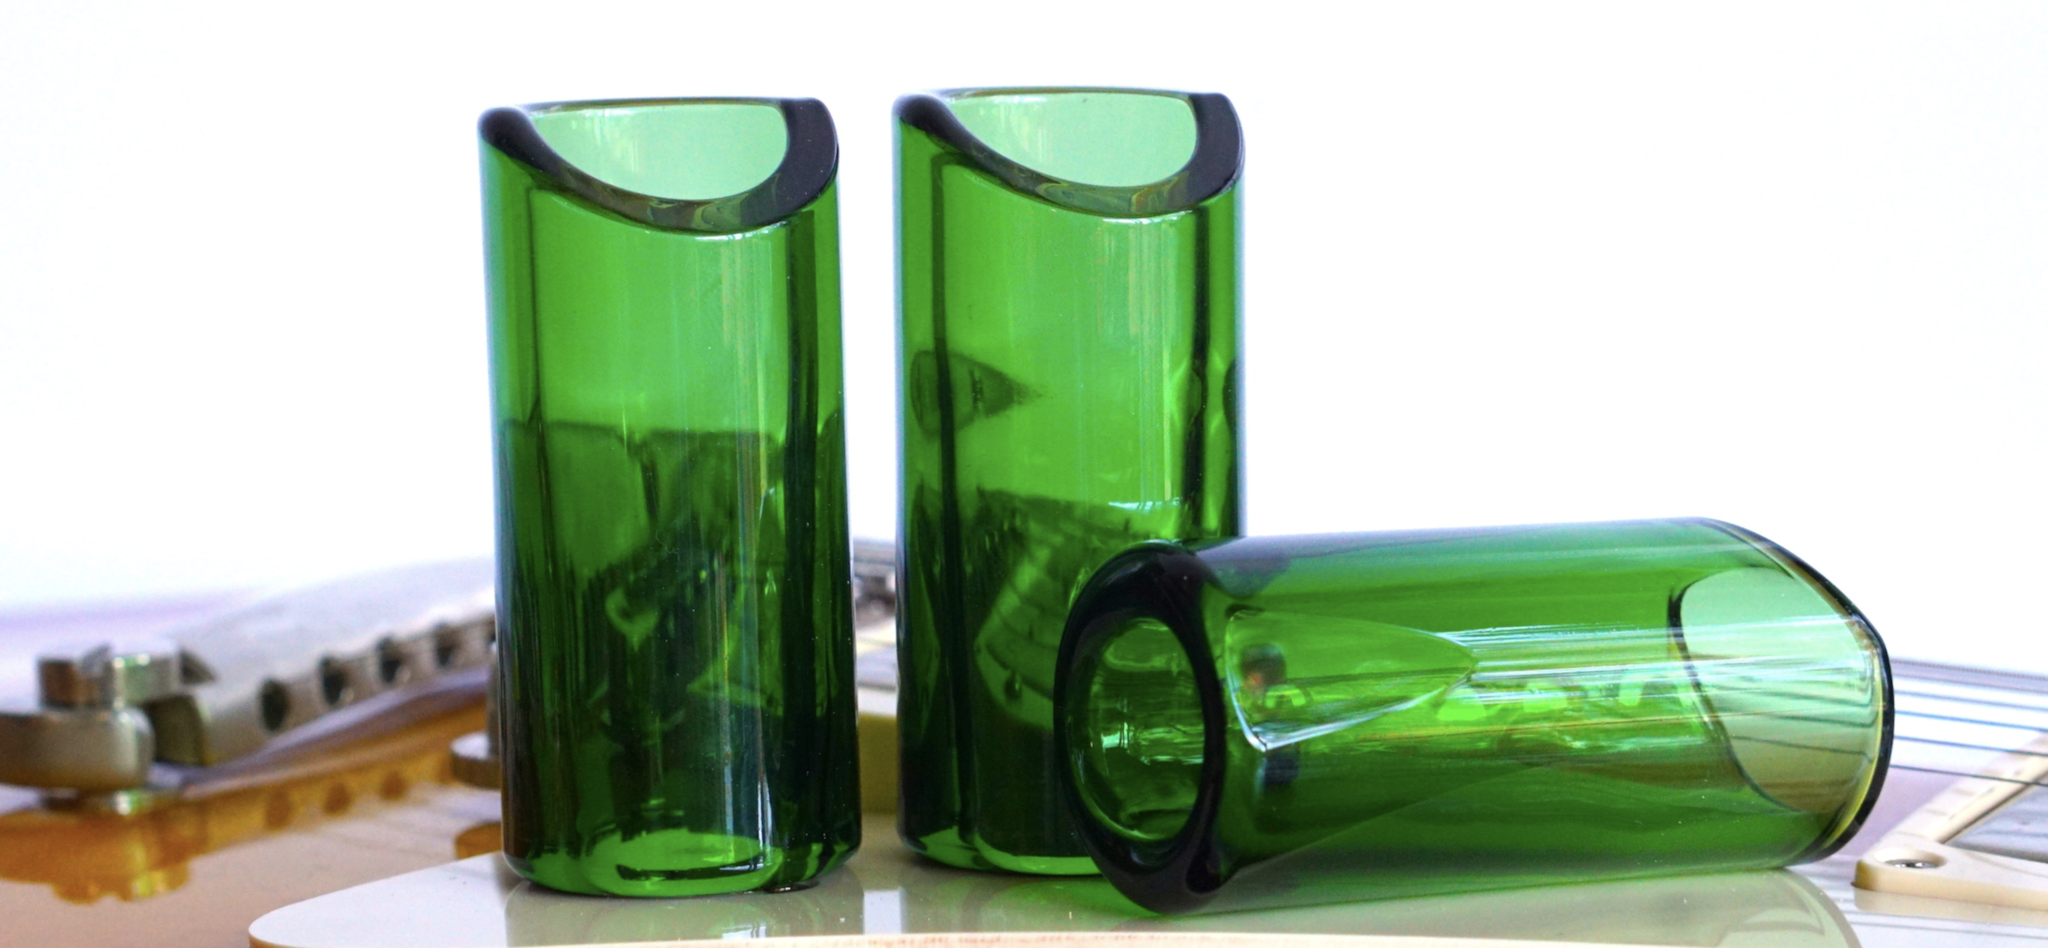 The Rock Slide Custom Shop - Medium Green Glass, Ring Size 9-11